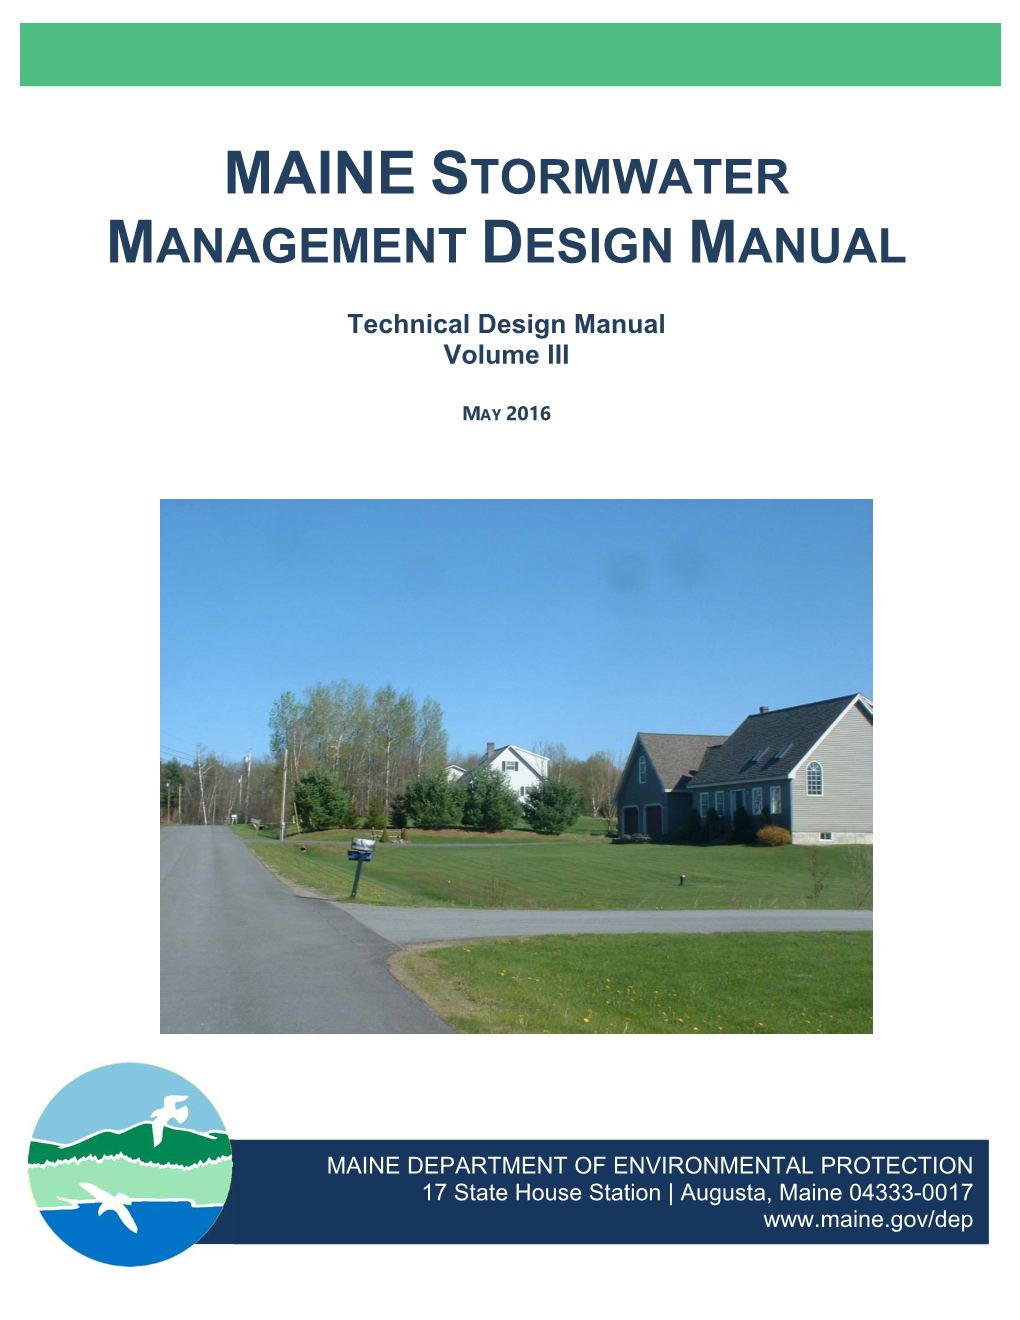 Maine Stormwater Management Design Manual Volume